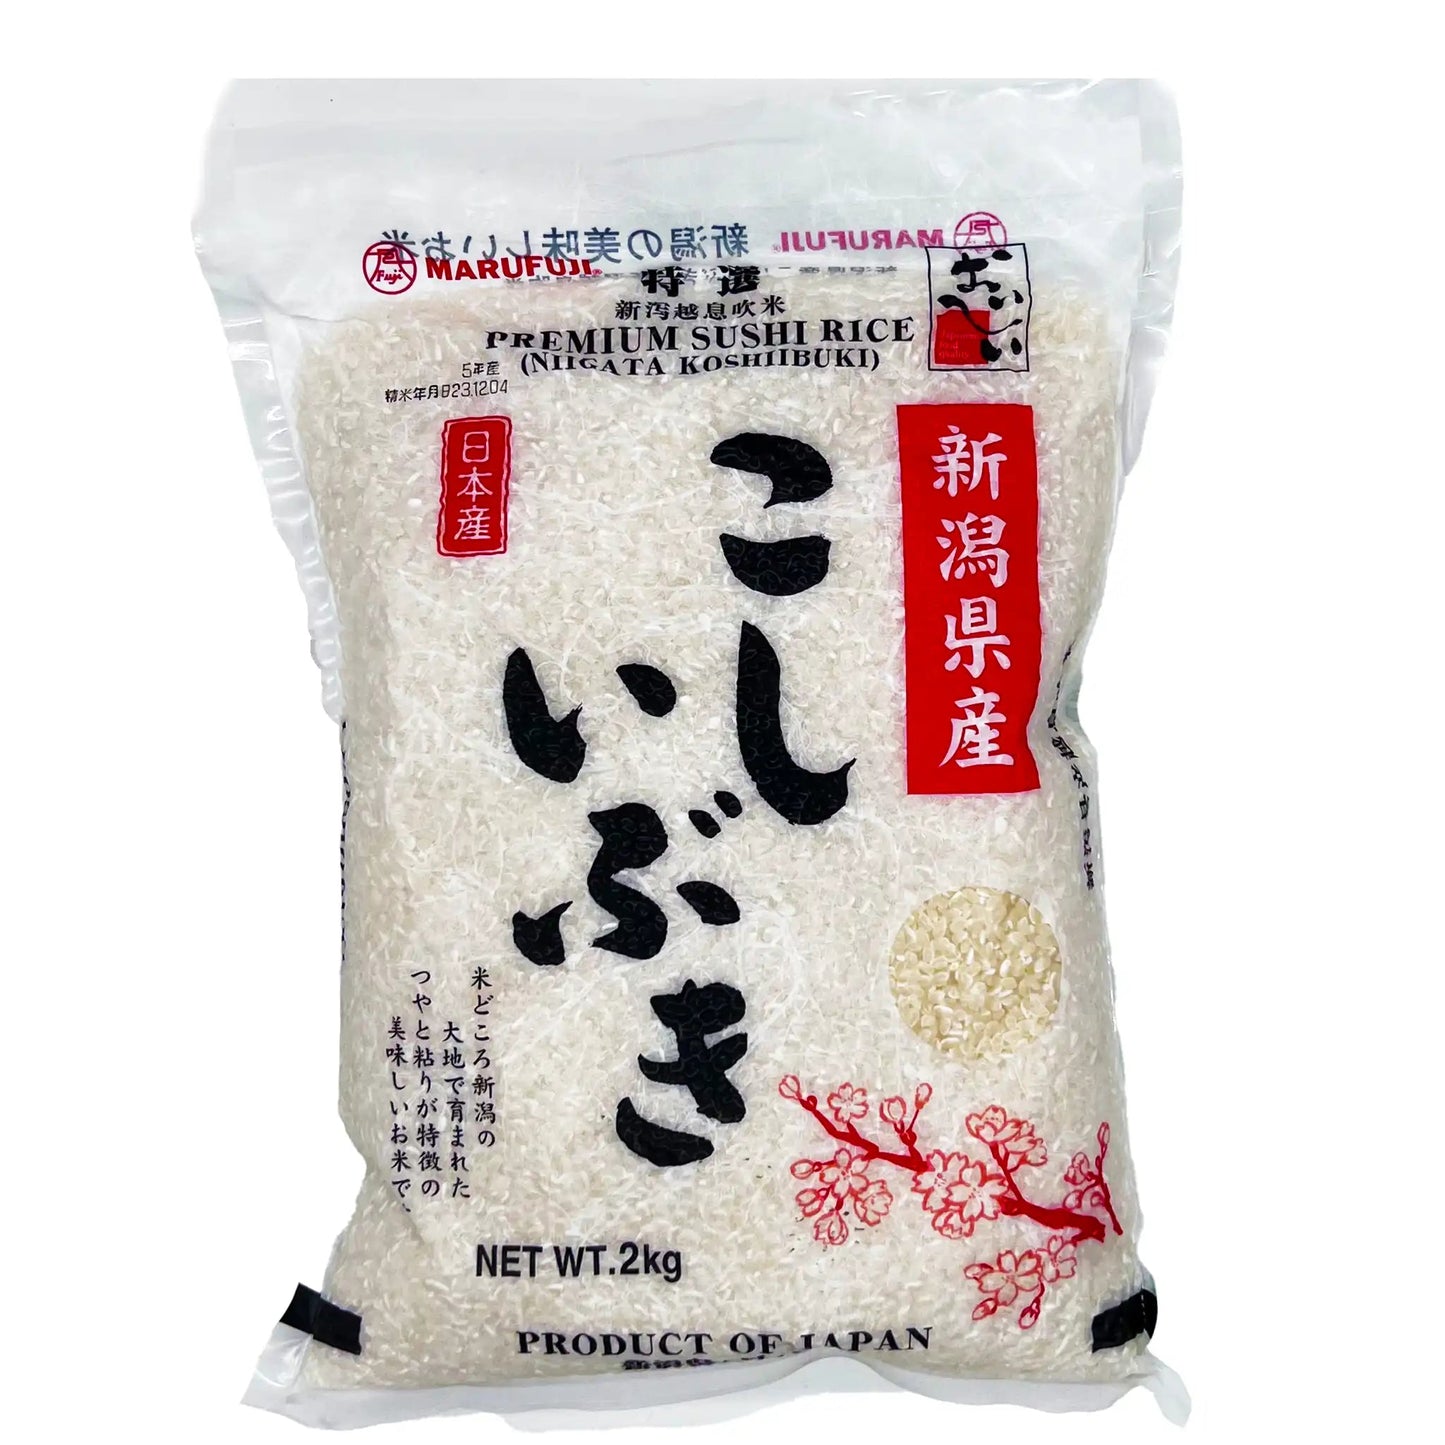 Marufuji Japanese Niigata Premium Sushi Rice 4.4lb - Tokyo Central - Japanese Imported Rice - Marufuji -